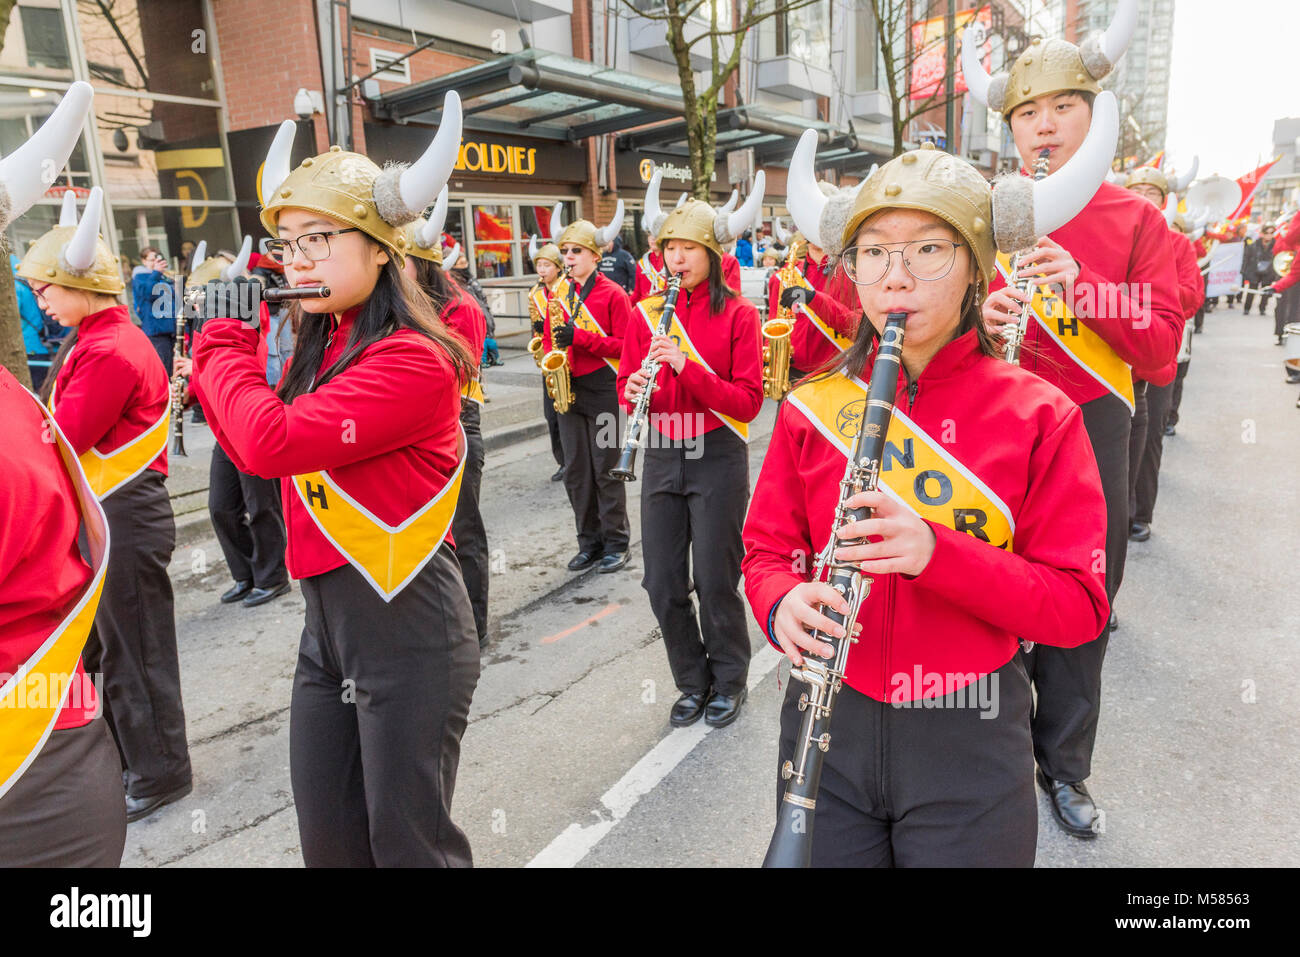 Chinese Lunar New Year Parade, Chinatown, Vancouver, British Columbia, Canada. Stock Photo